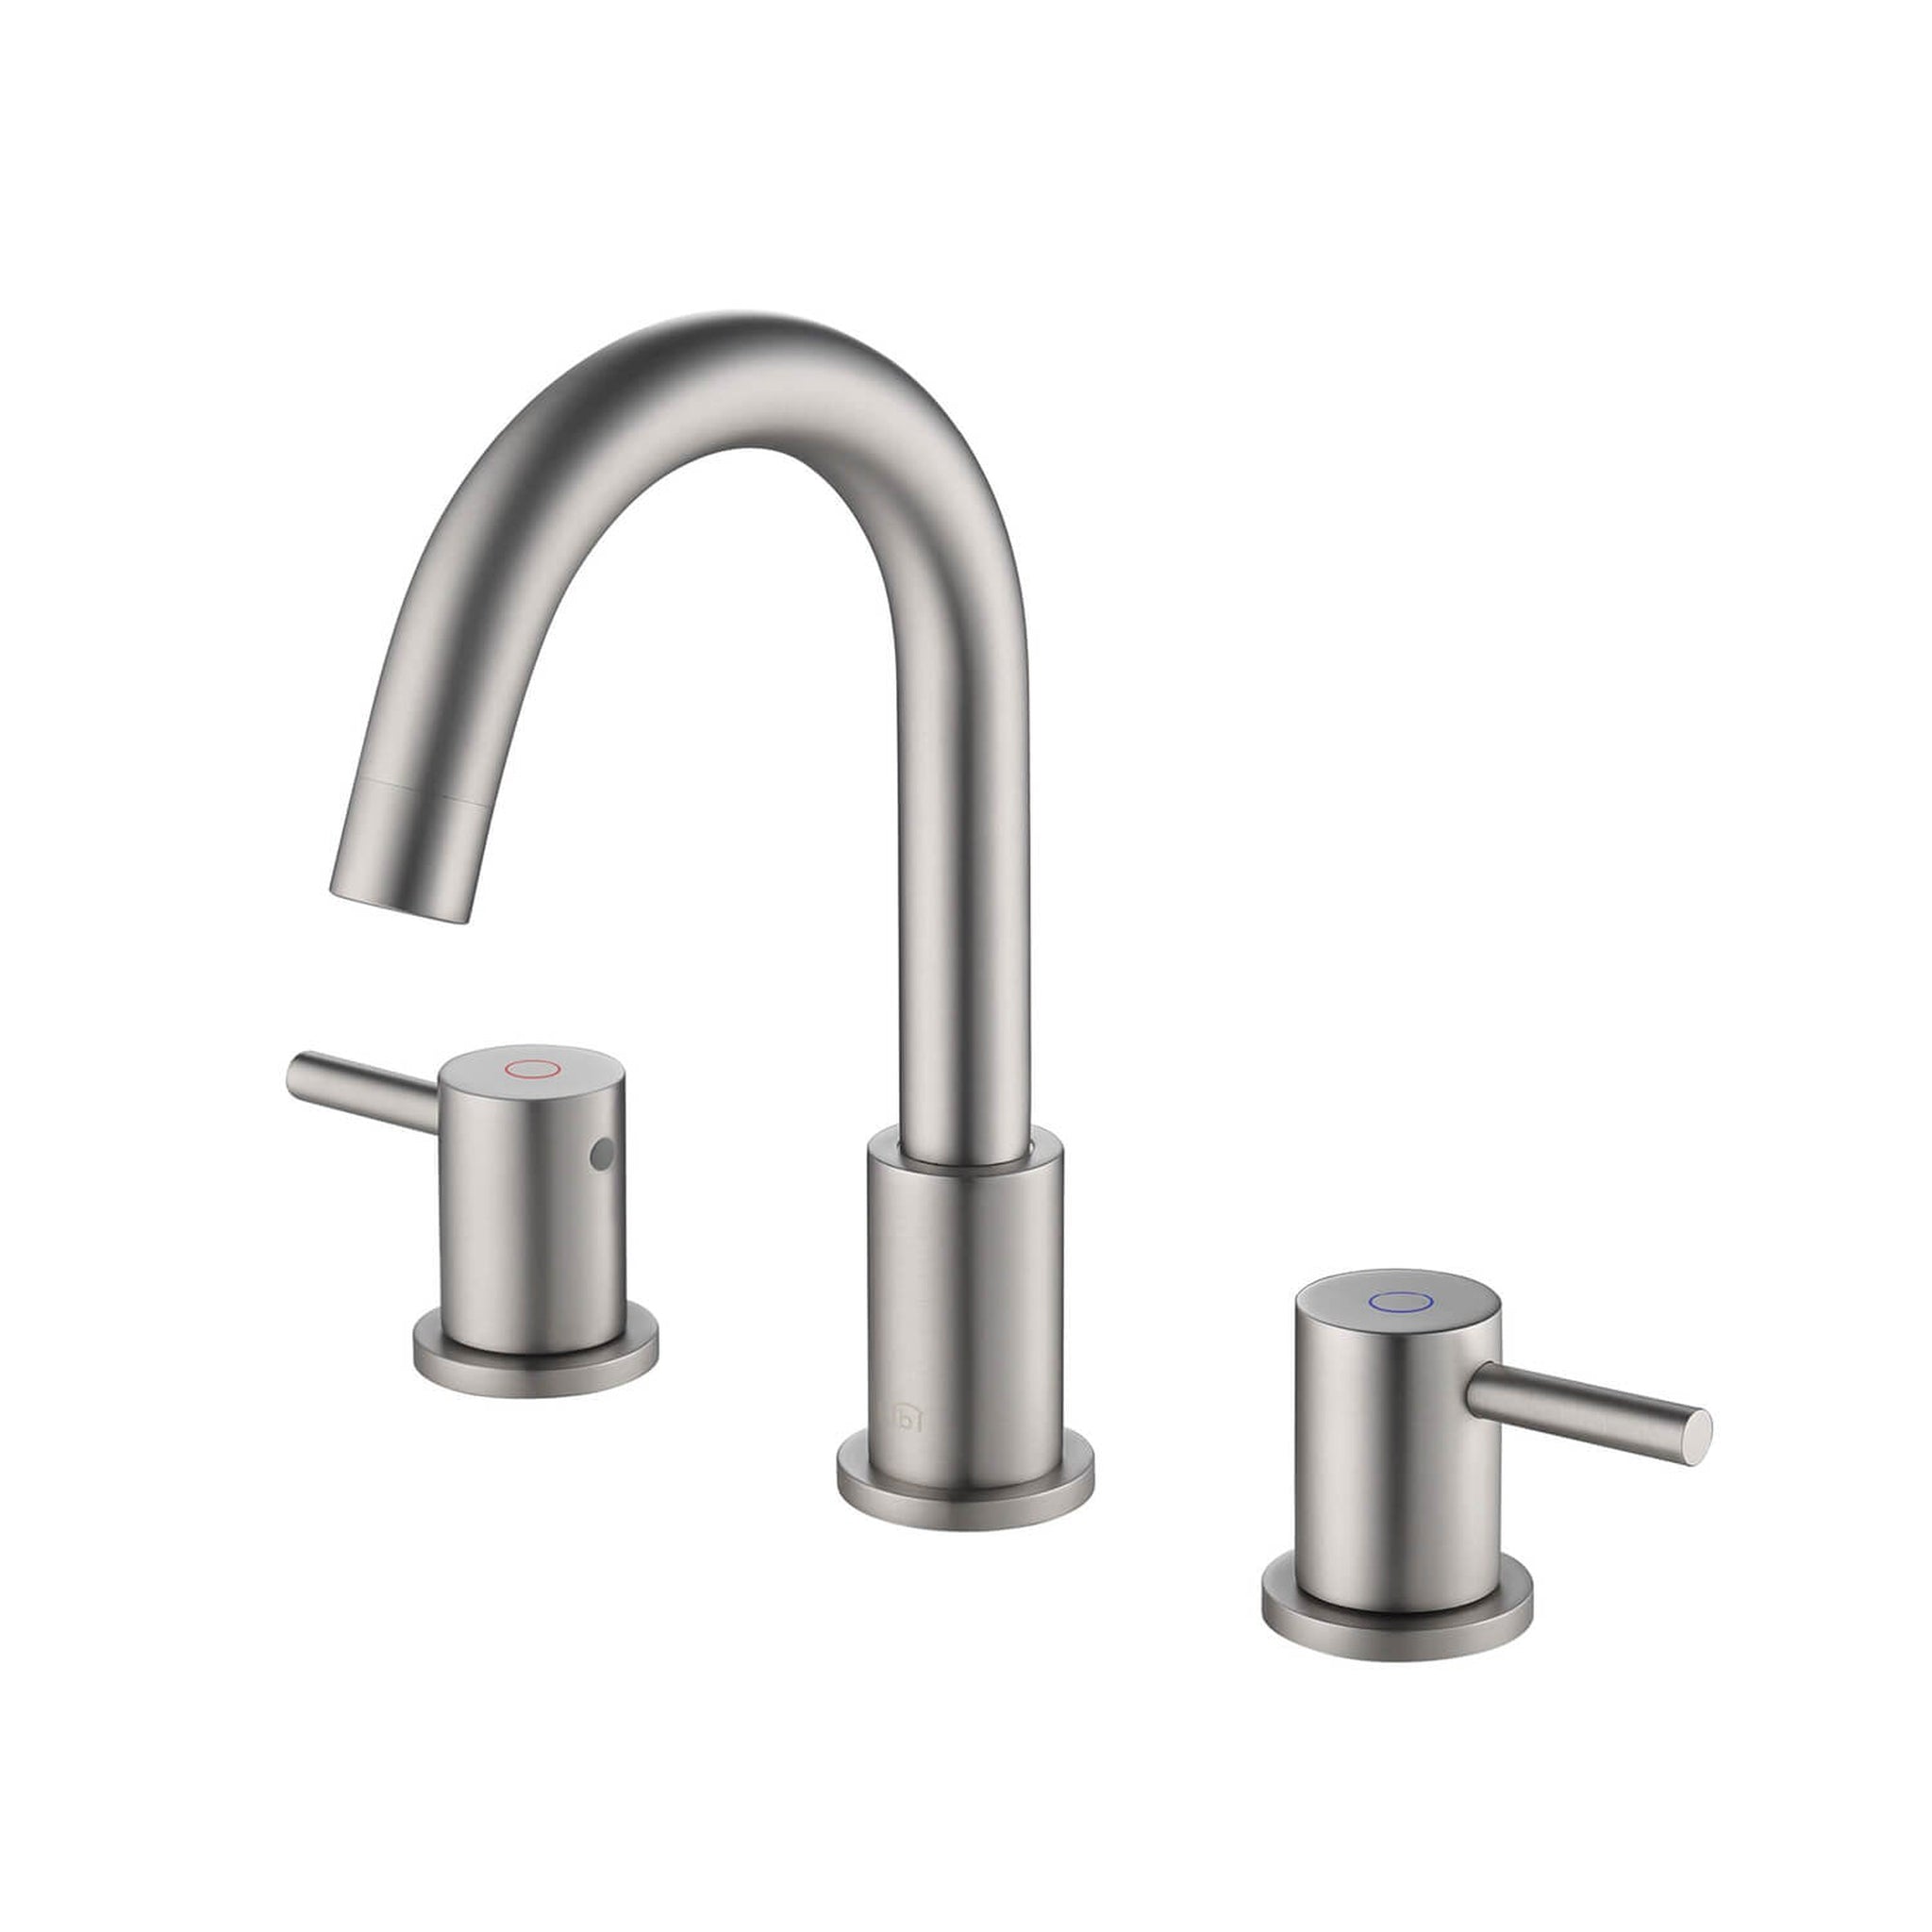 KIBI, KIBI Circular 8" Widespread 2-Handle Brushed Nickel Solid Brass Bathroom Sink Faucet With Pop-Up Drain